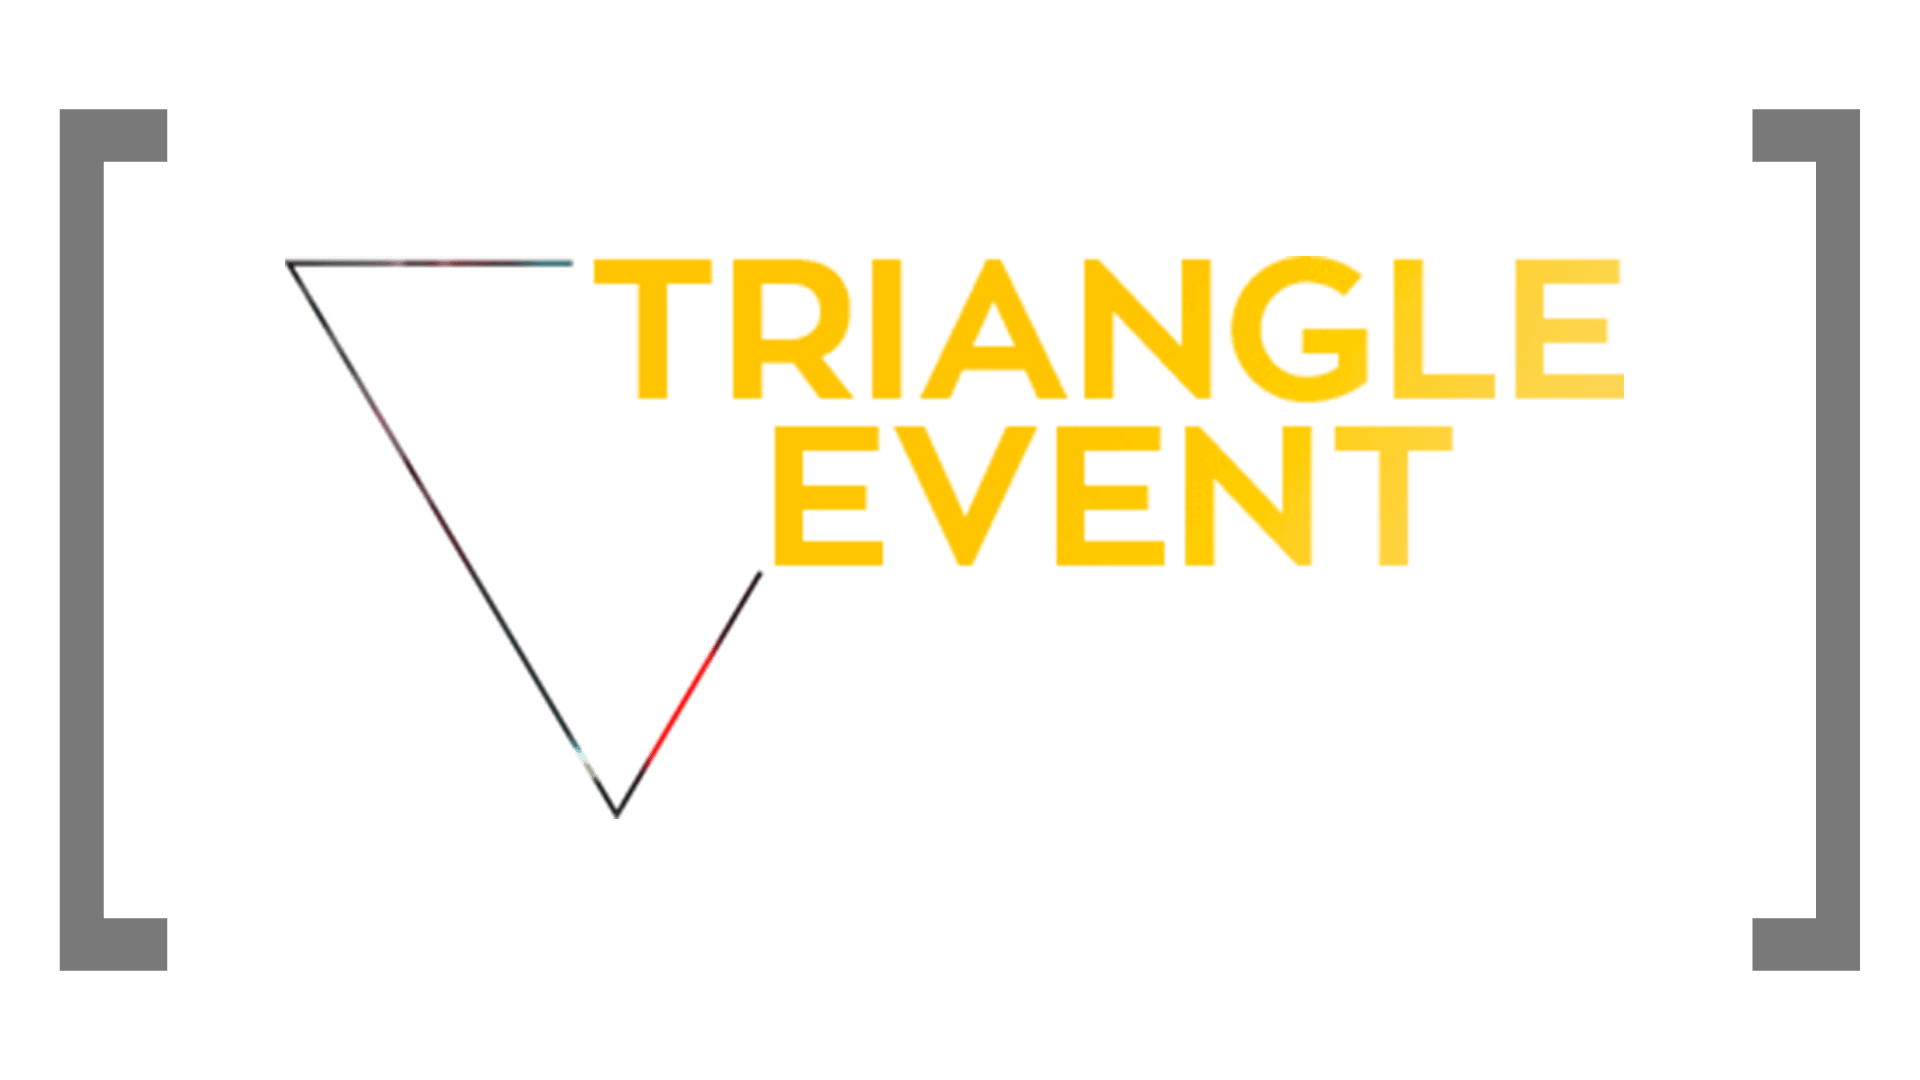 Triangle Event